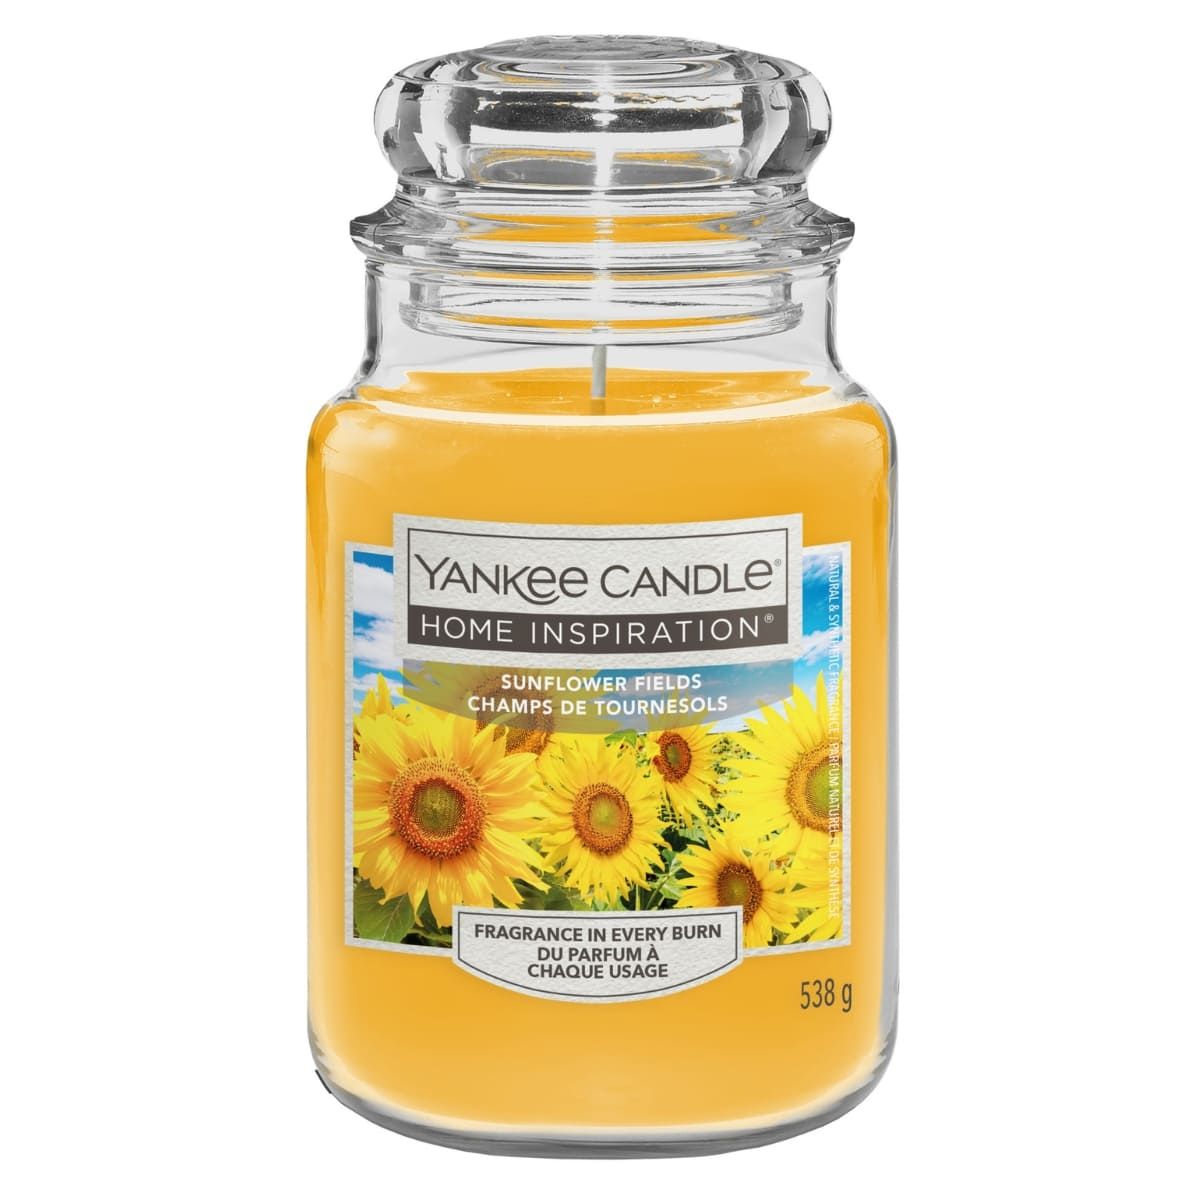 Ароматическая Свеча Yankee Candle Home Inspiration Sunflower Fields, 538 гр свеча ароматическая yankee candle tropical jungle 411 гр